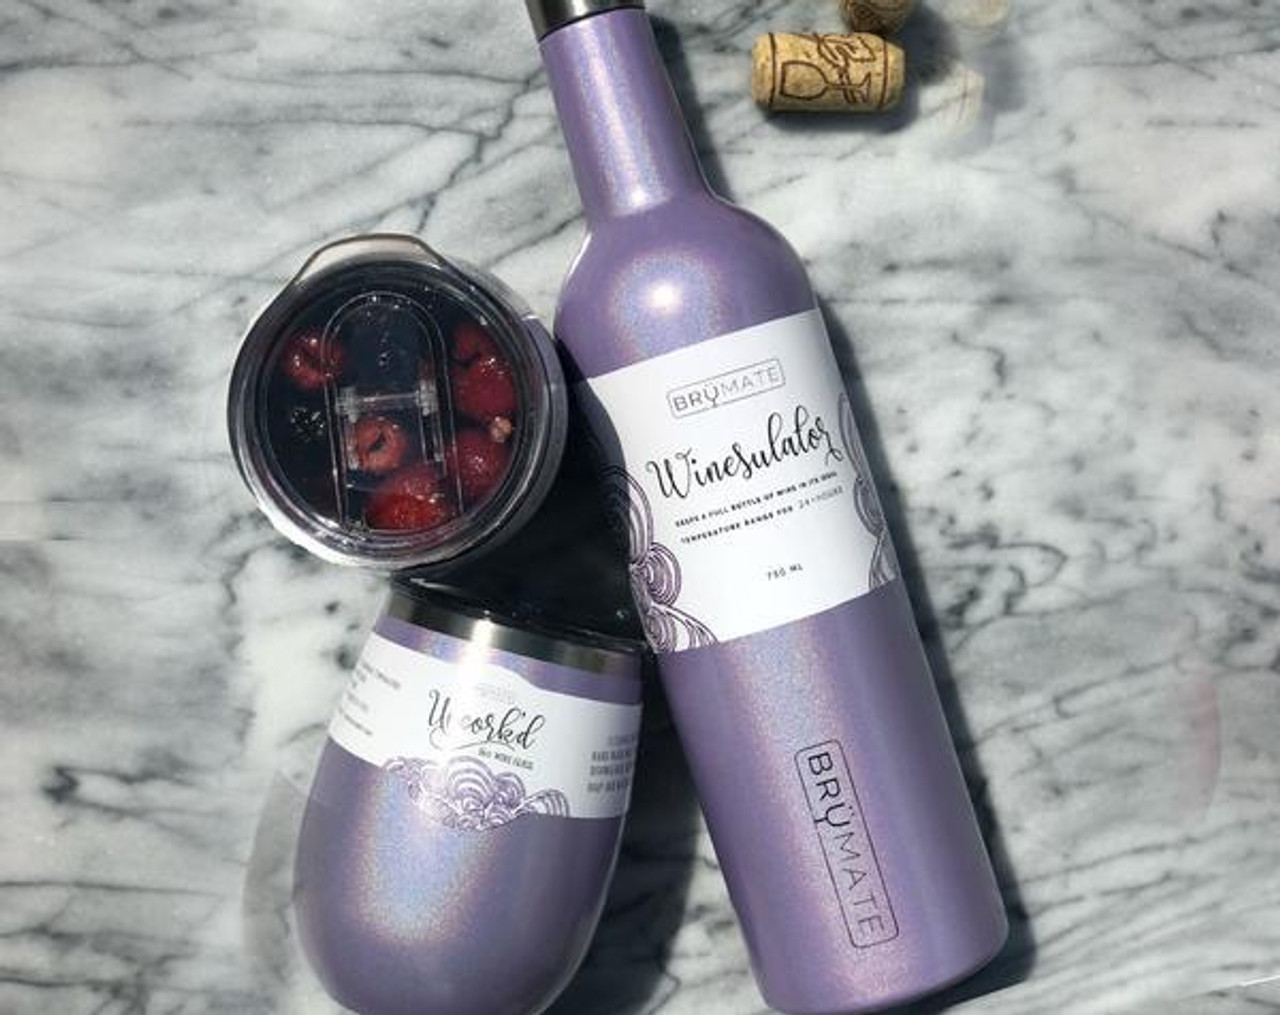 BruMate uncork'd XL wine tumbler violet